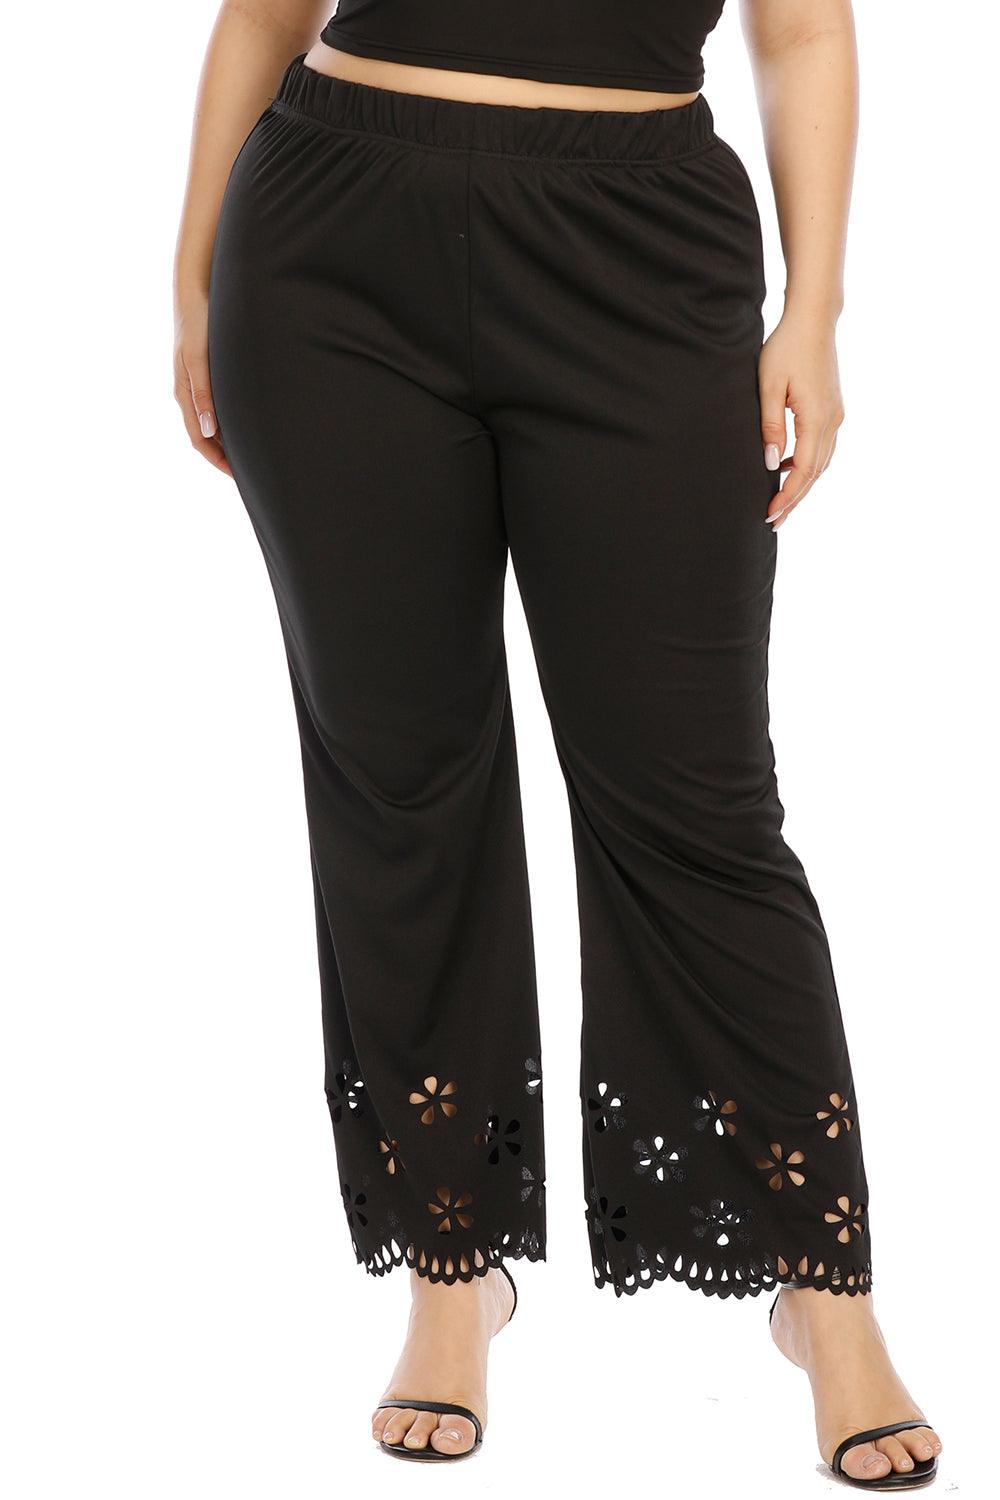 Bona Fide Fashion - Plus Size Openwork Detail Pants - Women Fashion - Bona Fide Fashion